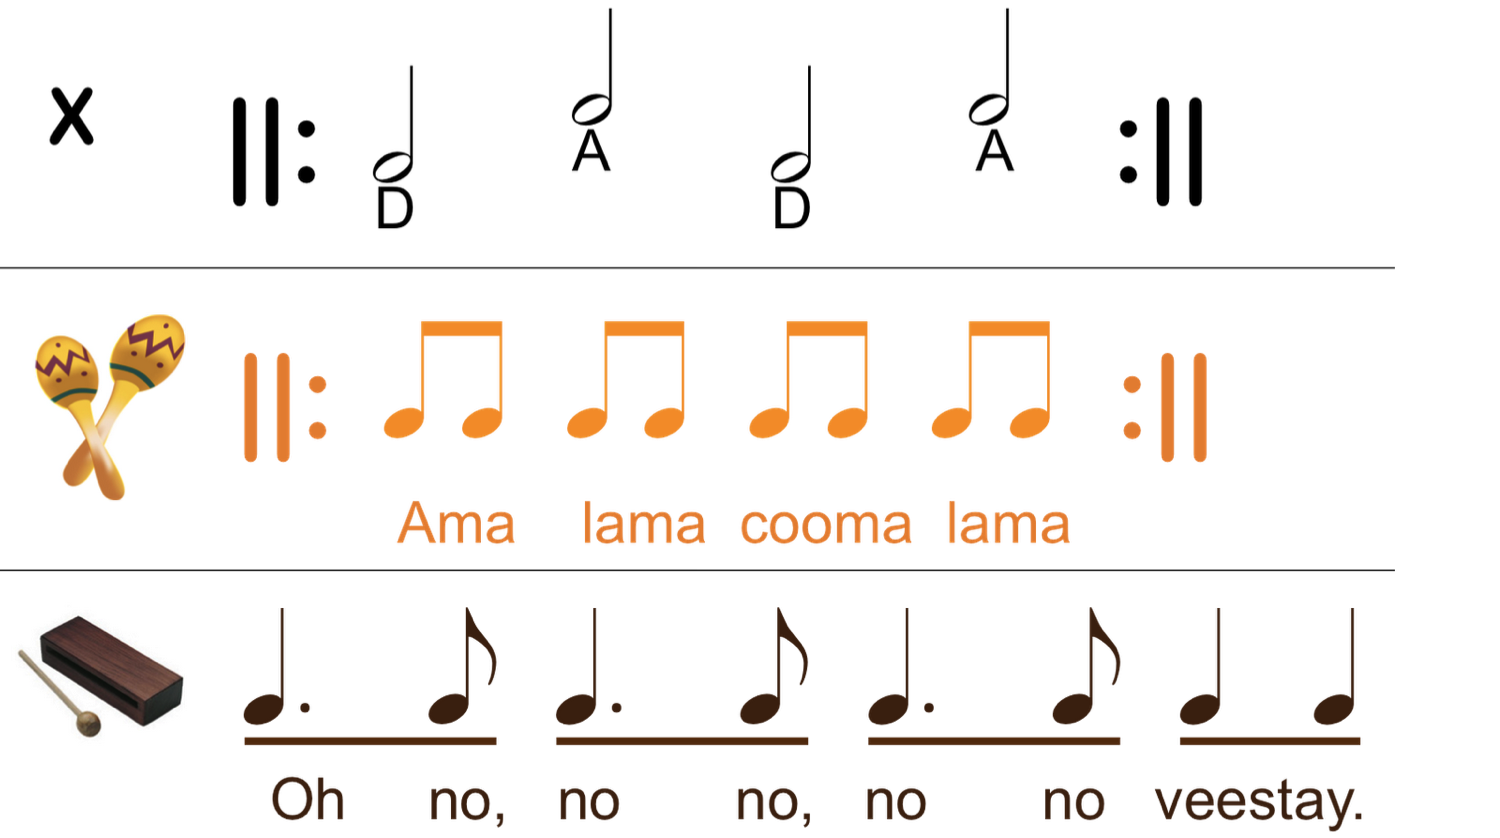 Ama Lama - Beth's Notes